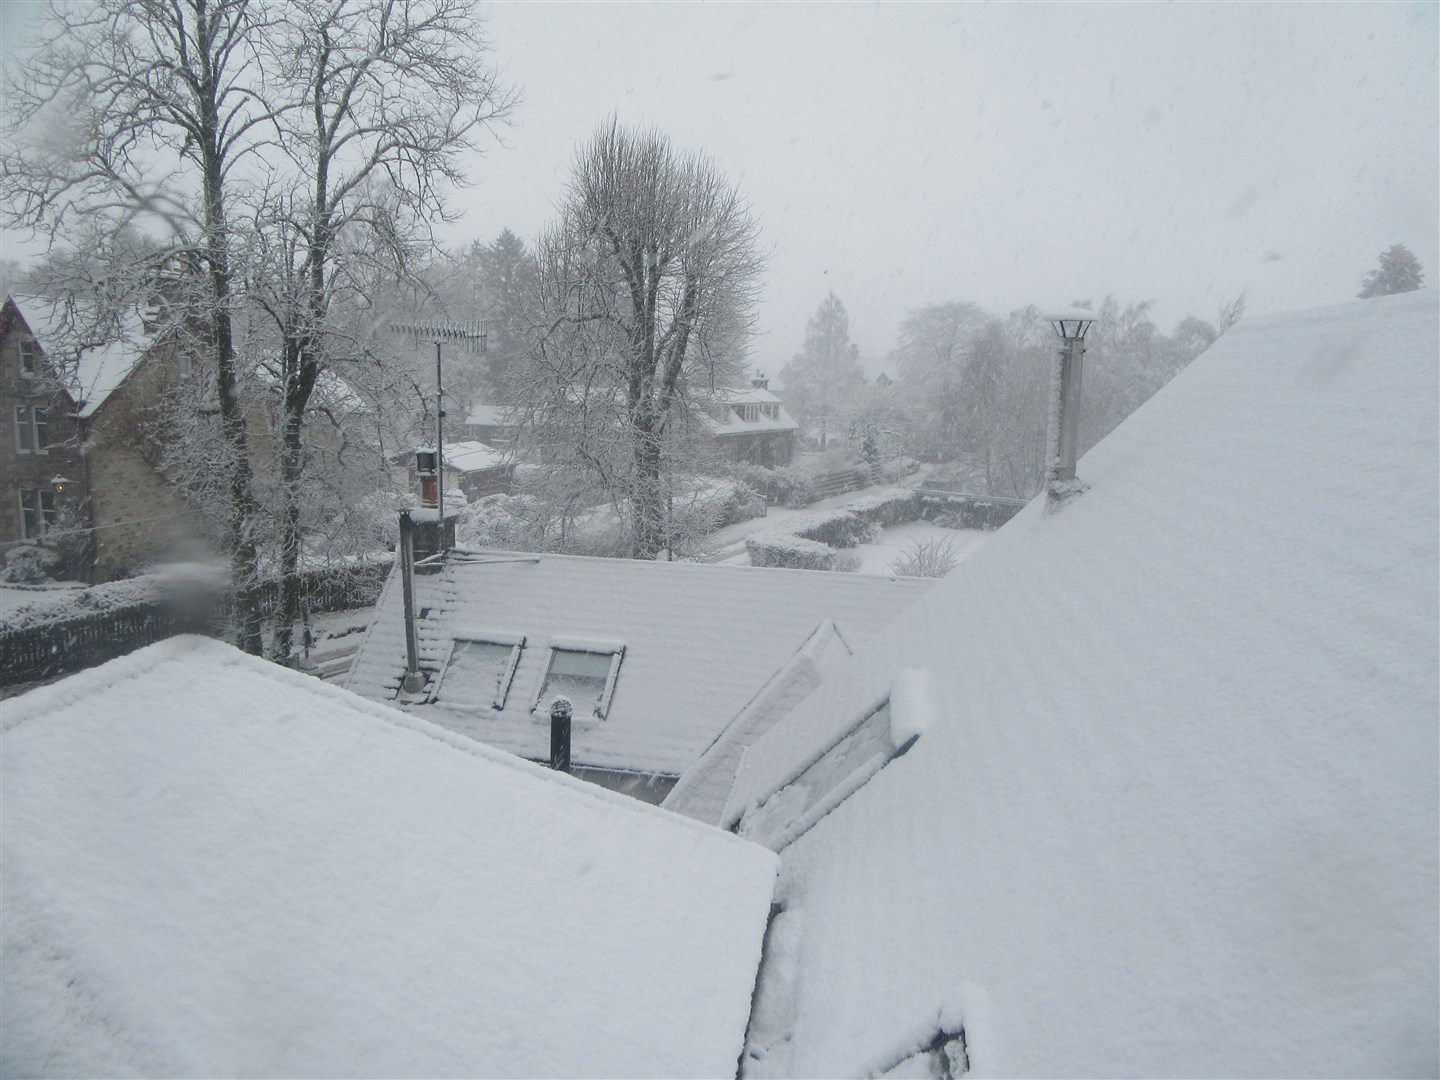 Snows in Badenoch today